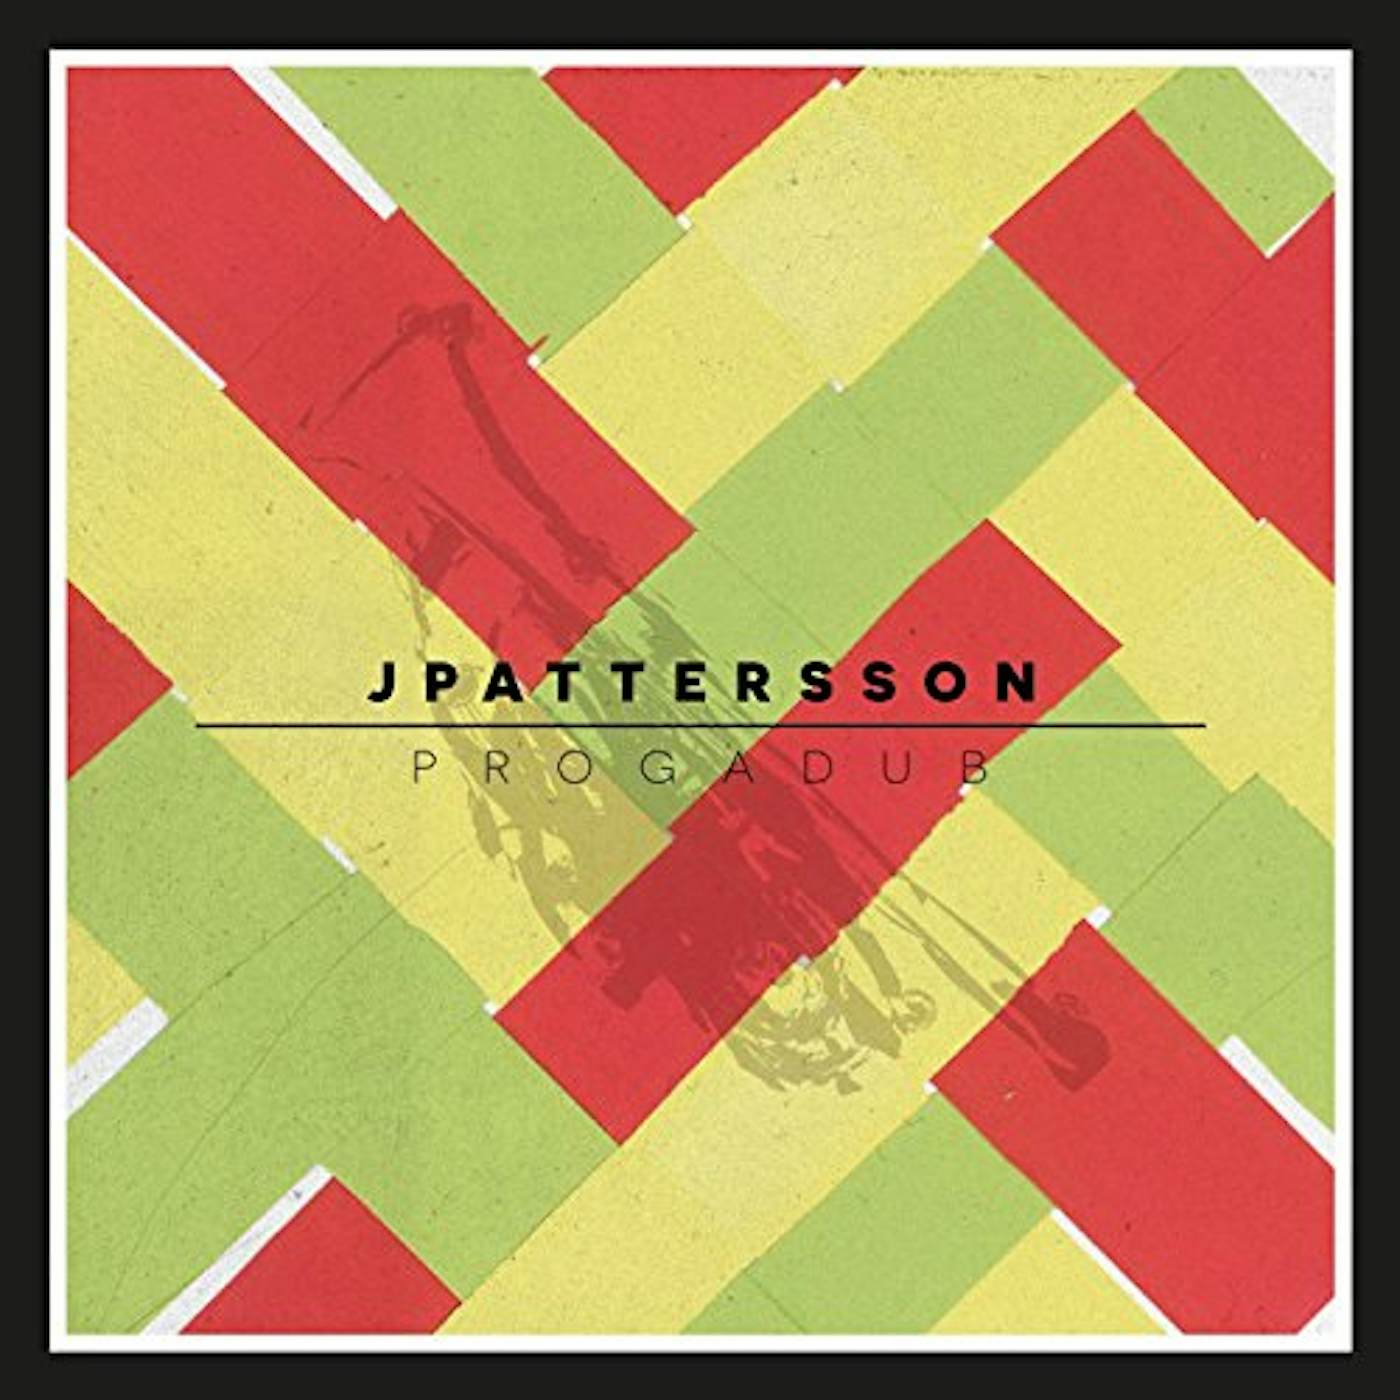 JPattersson PROGaDUB Vinyl Record